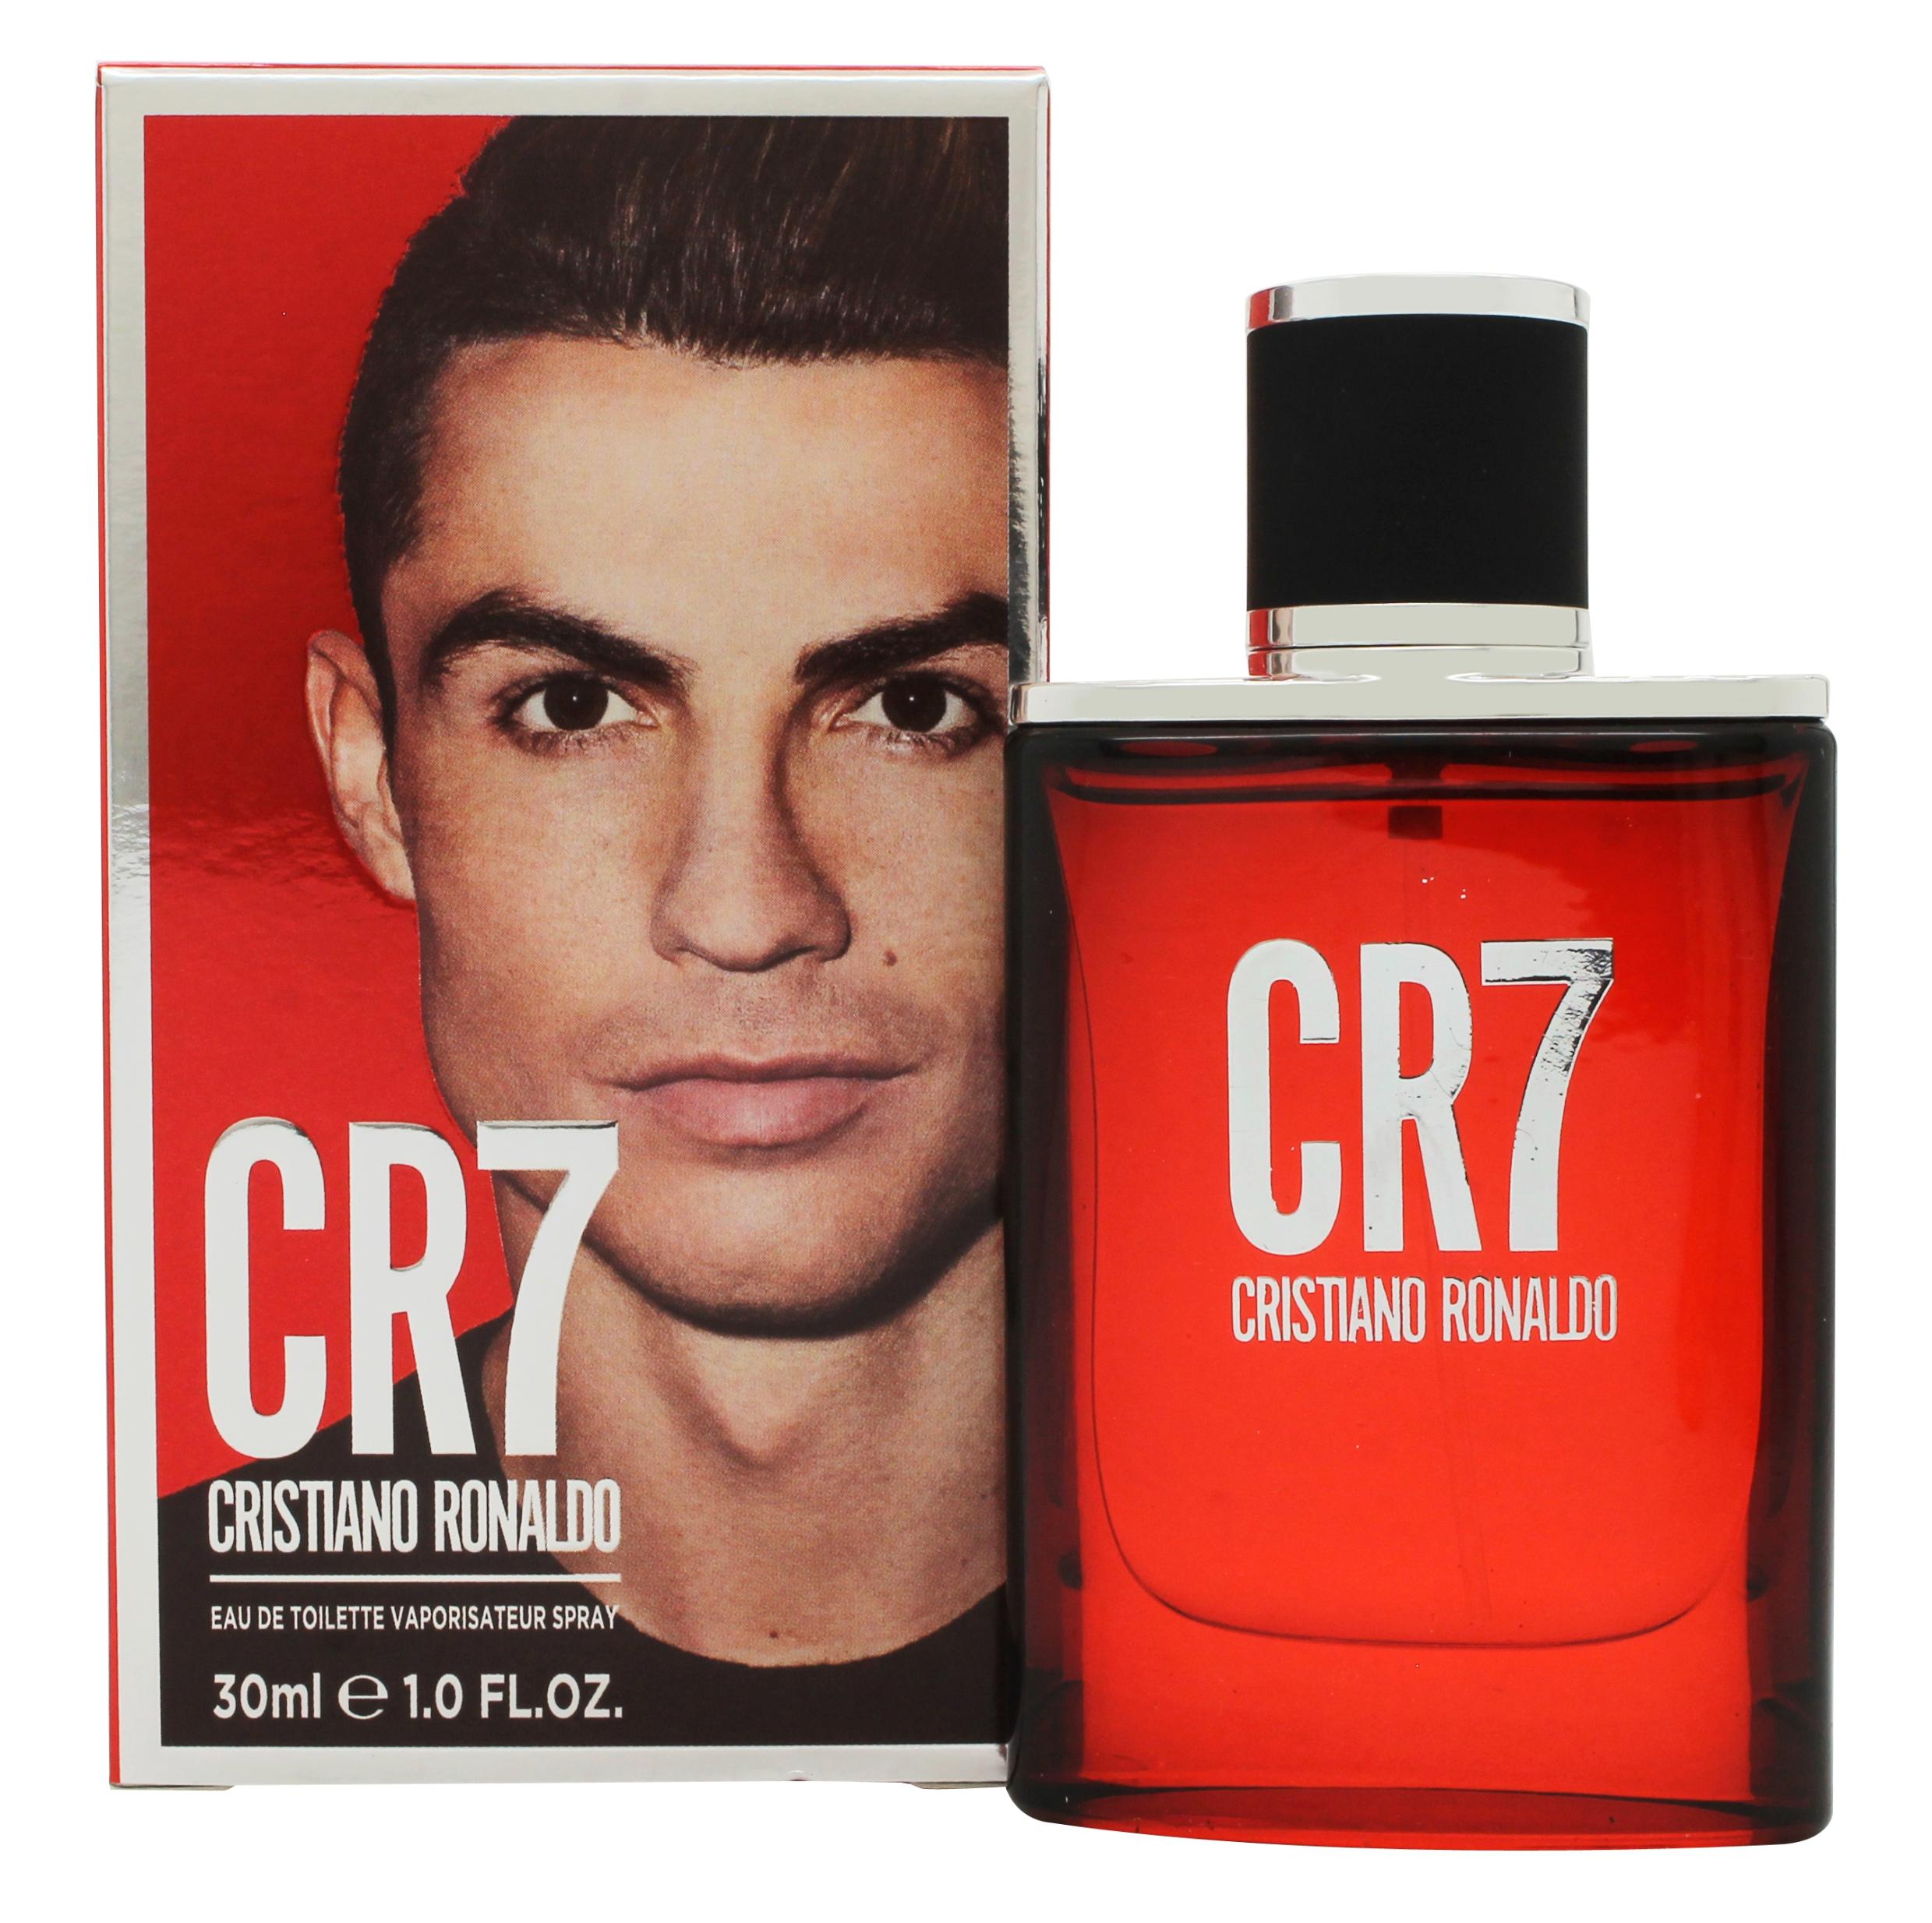 View Cristiano Ronaldo CR7 Eau de Toilette 30ml Spray information